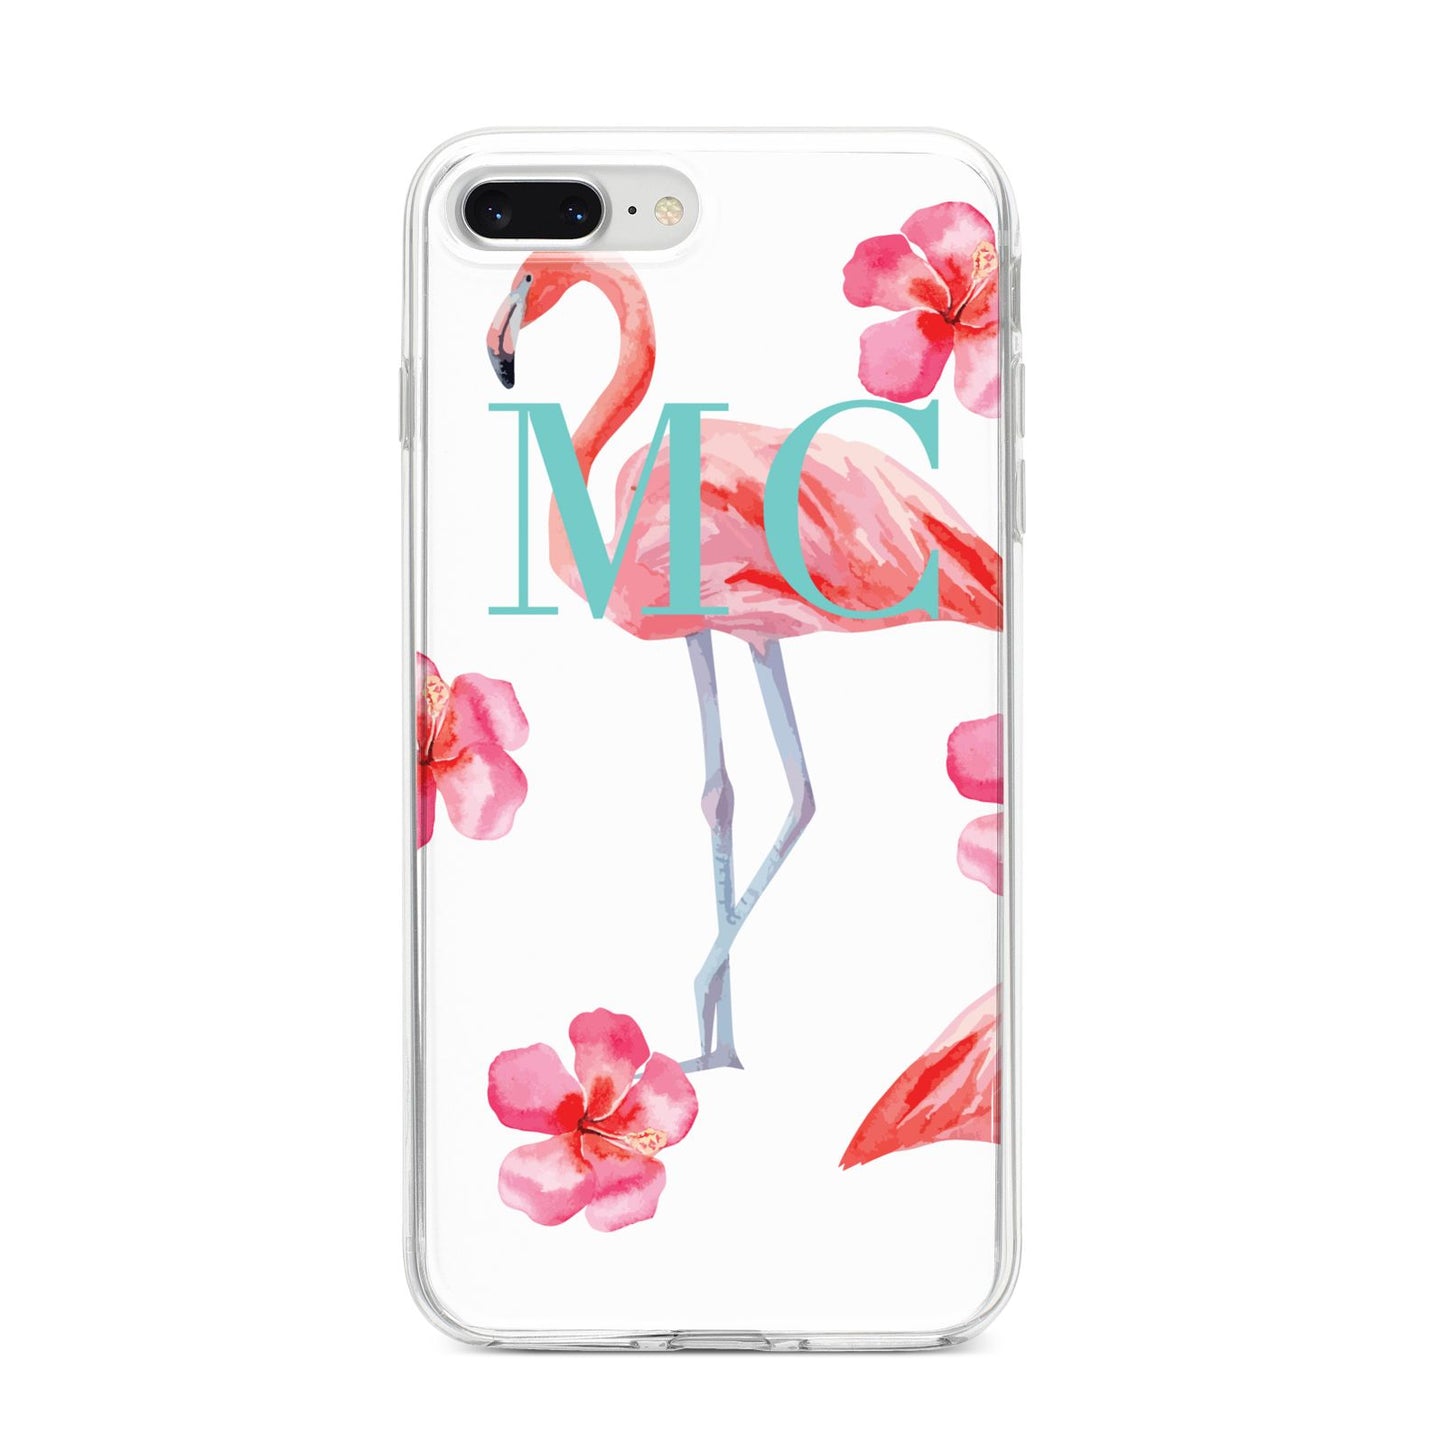 Personalised Initials Flamingo 3 iPhone 8 Plus Bumper Case on Silver iPhone